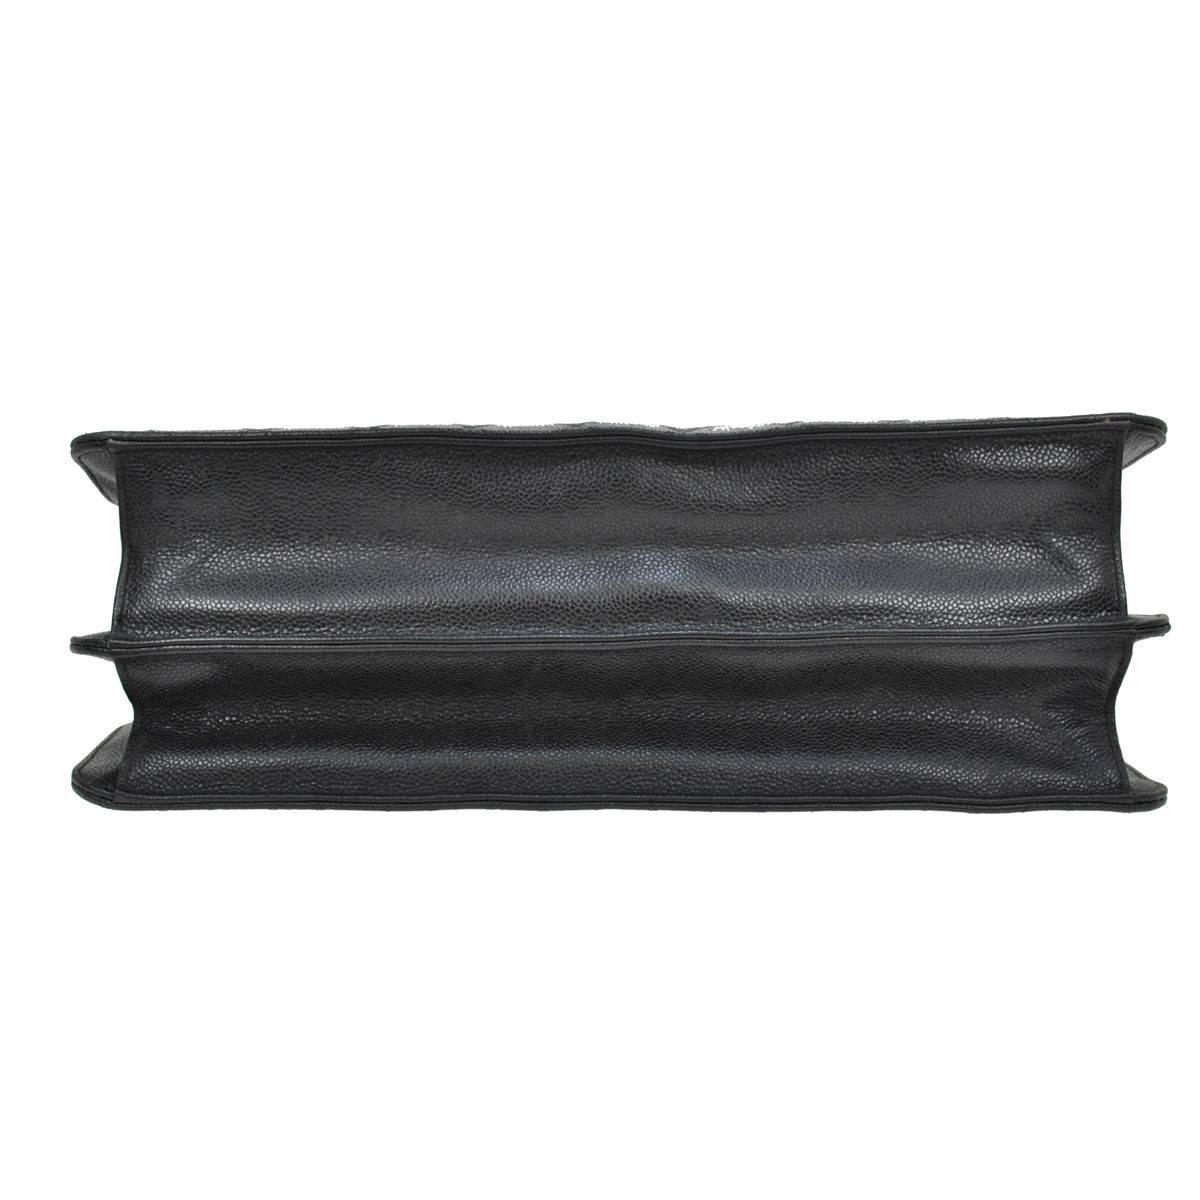 Chanel Black Leather Top Handle Satchel Men's Travel Carryall Briefcase Bag 3